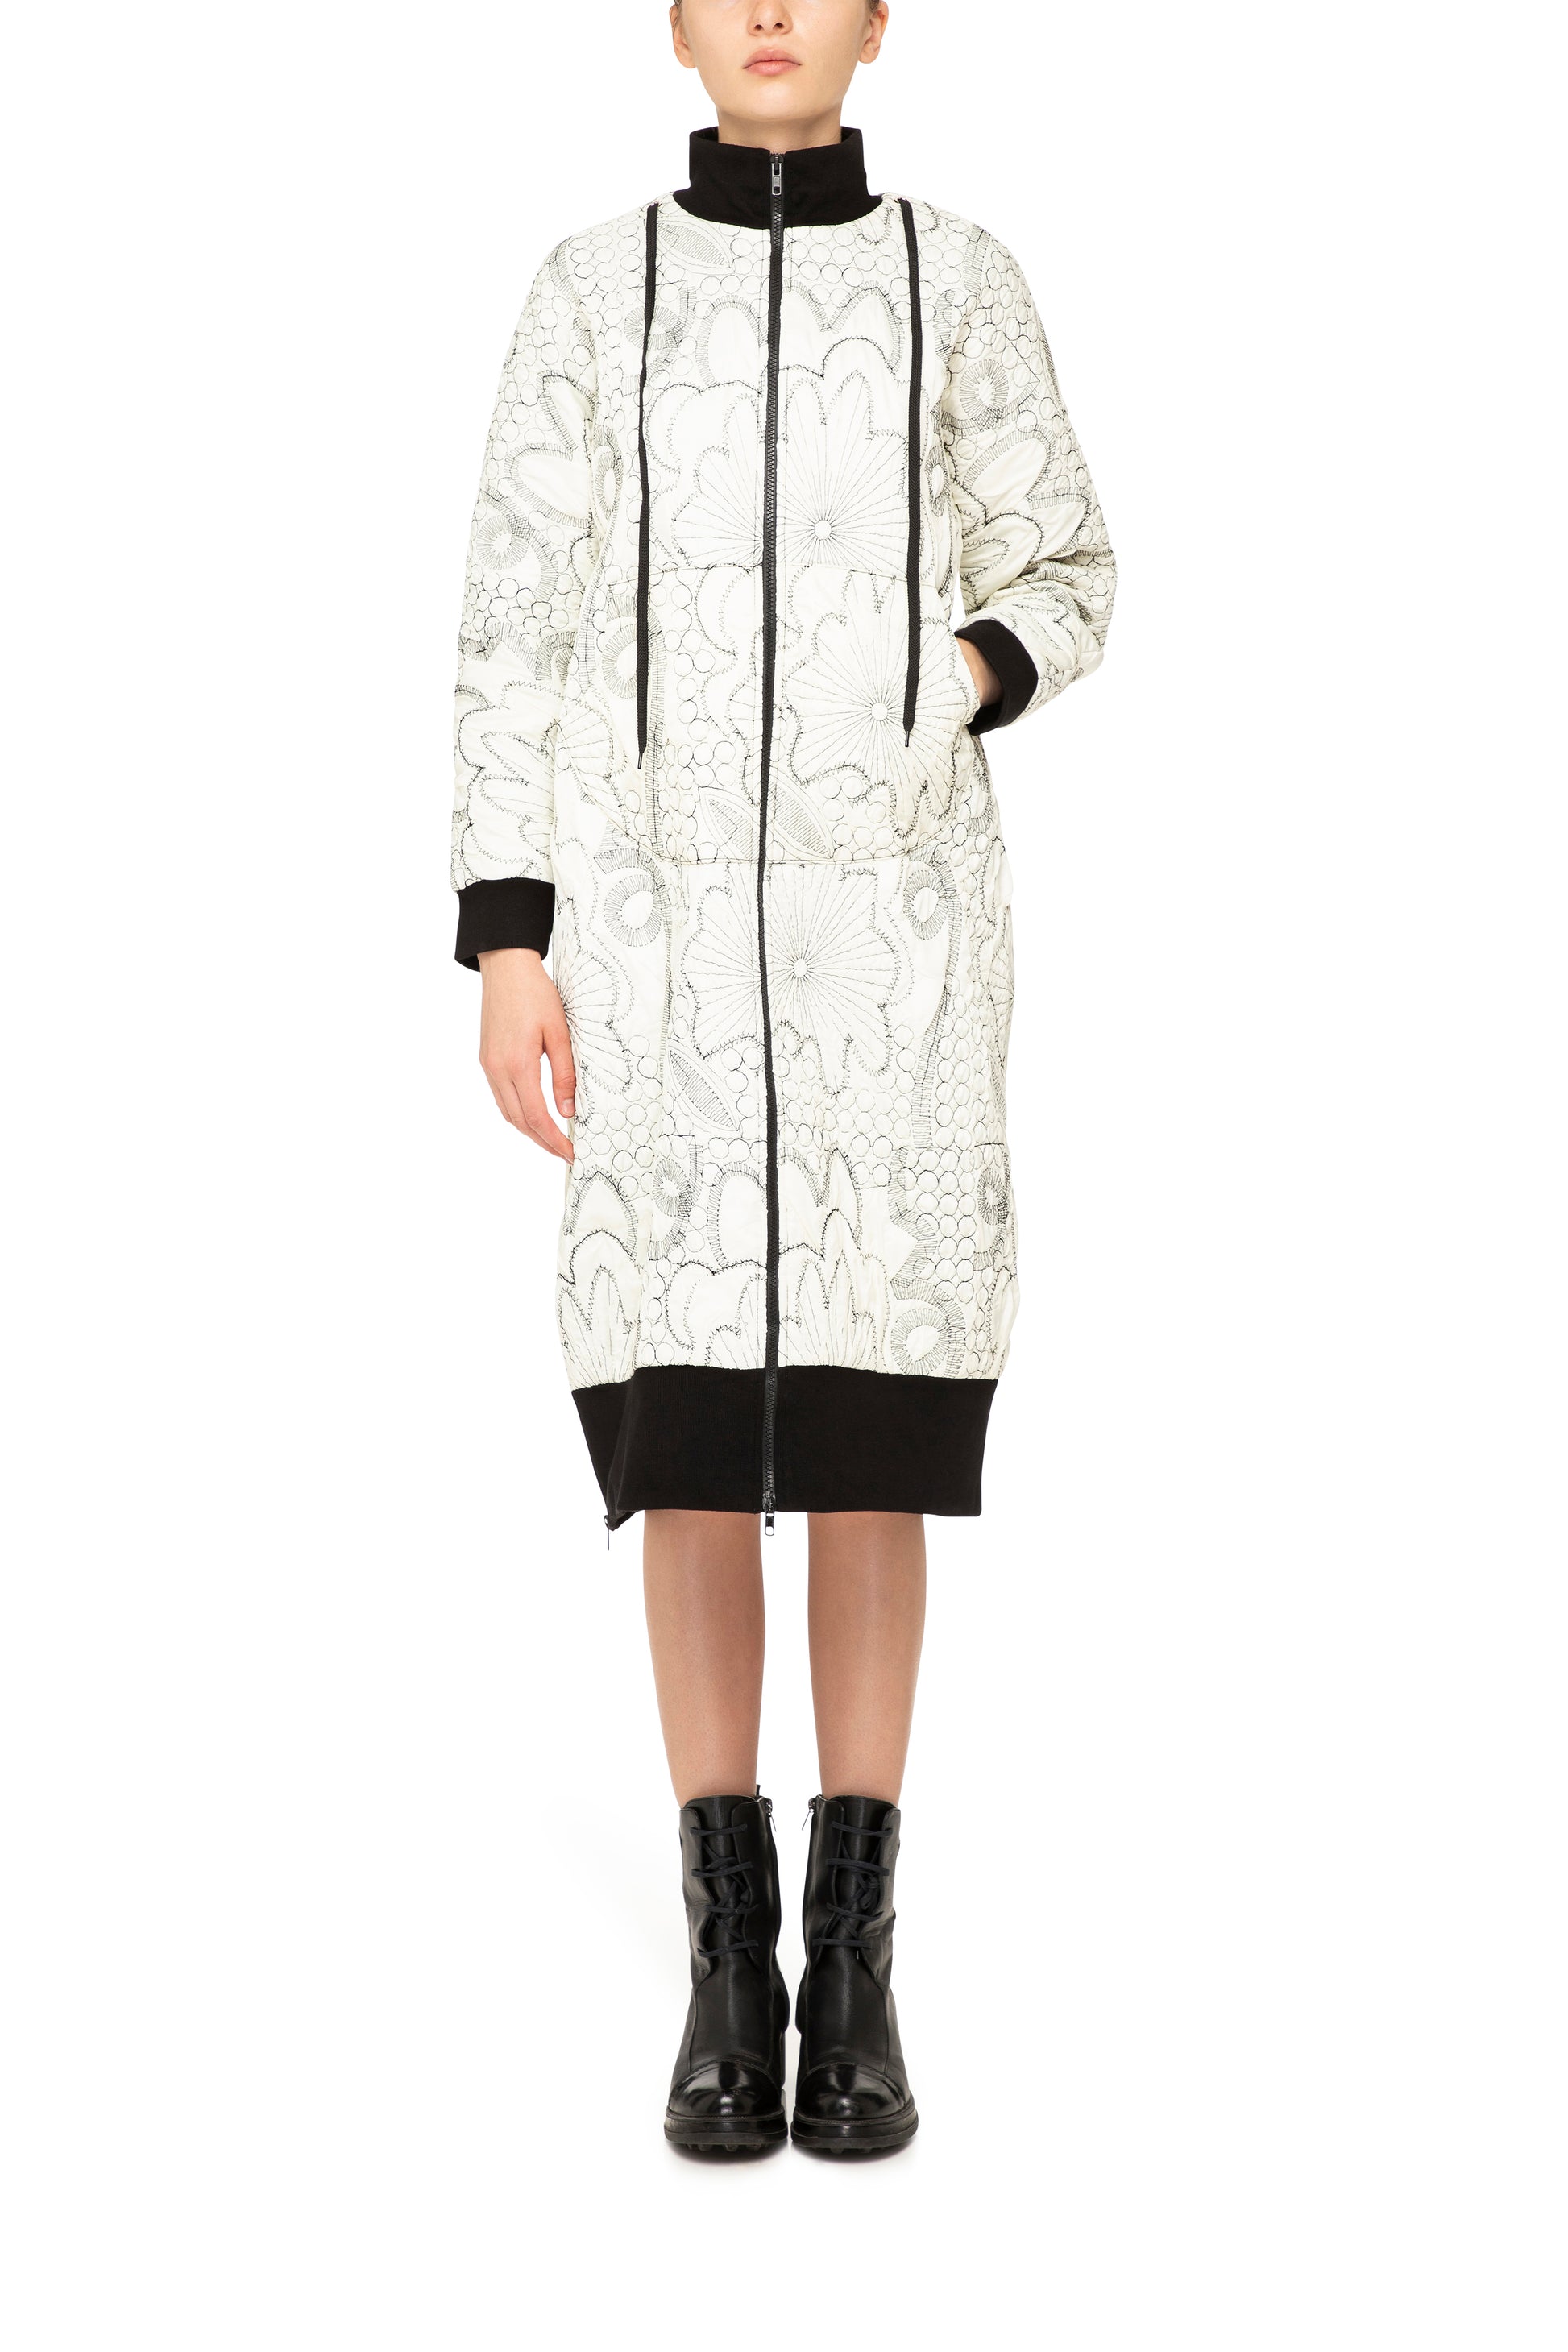 Lampo Coat in white, white coat, white and black coat, padded coat, embroidered coat, fashion coat, designer coat, bright coat, unique coat